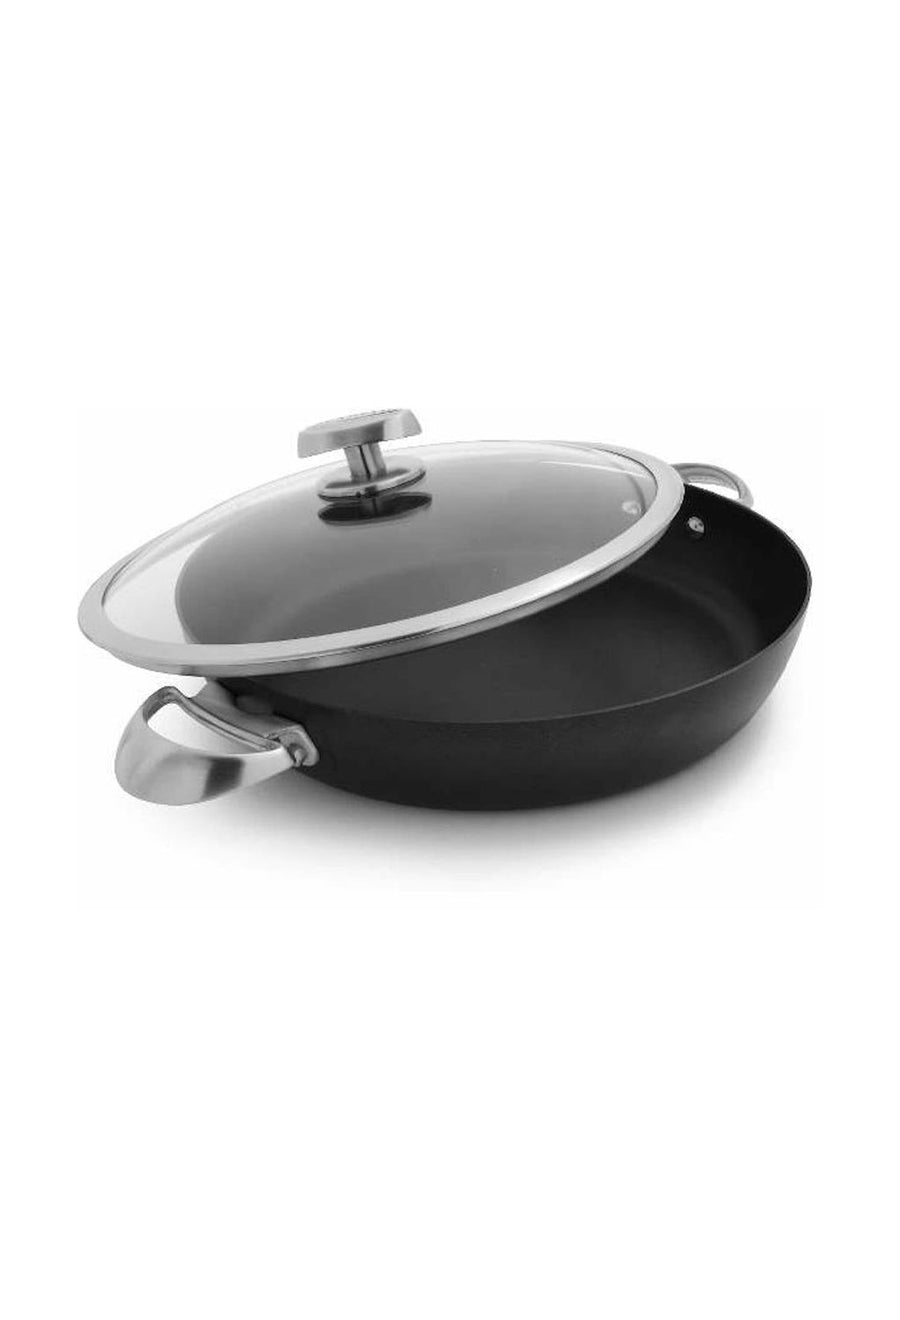 Scanpan Pro IQ 32cm Chef Pan with lid